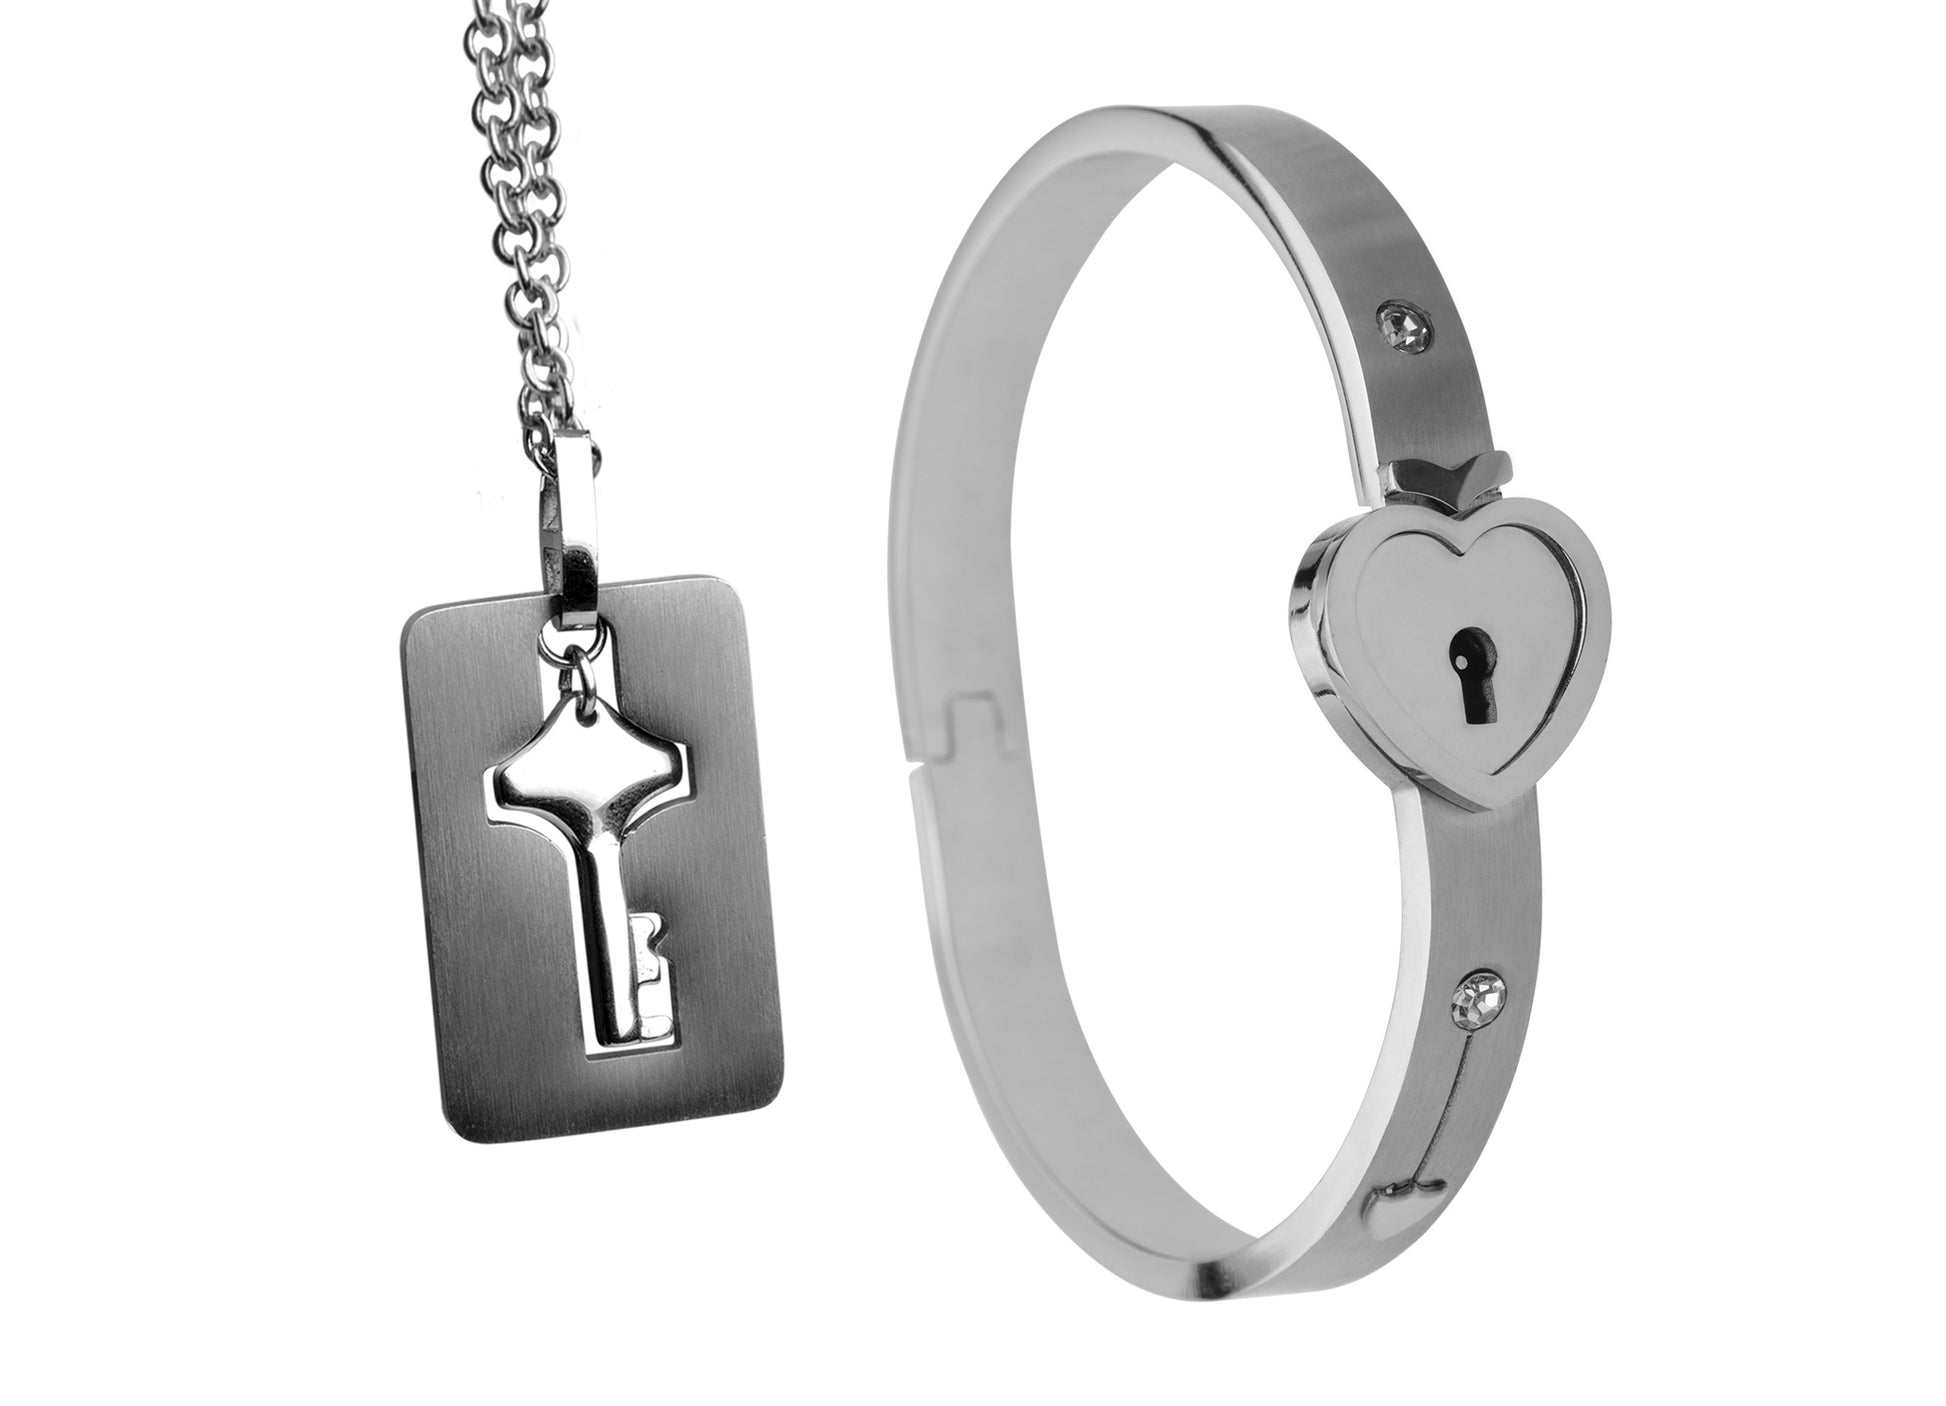 Cuffed Locking Bracelet and Key Necklace - UABDSM